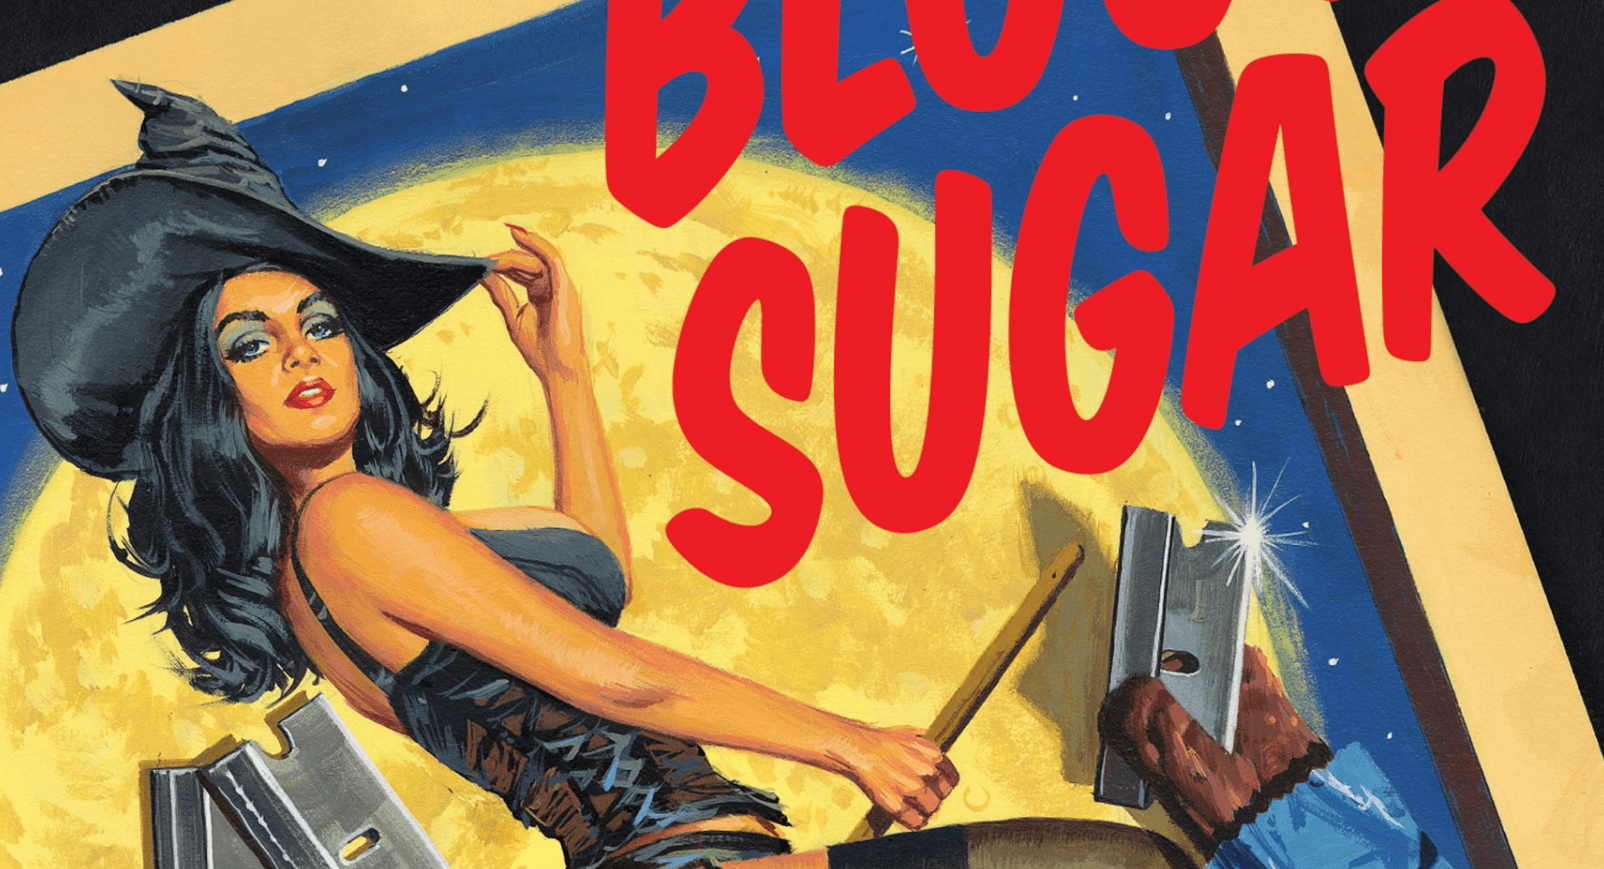 'Blood Sugar' by Daniel Kraus Review